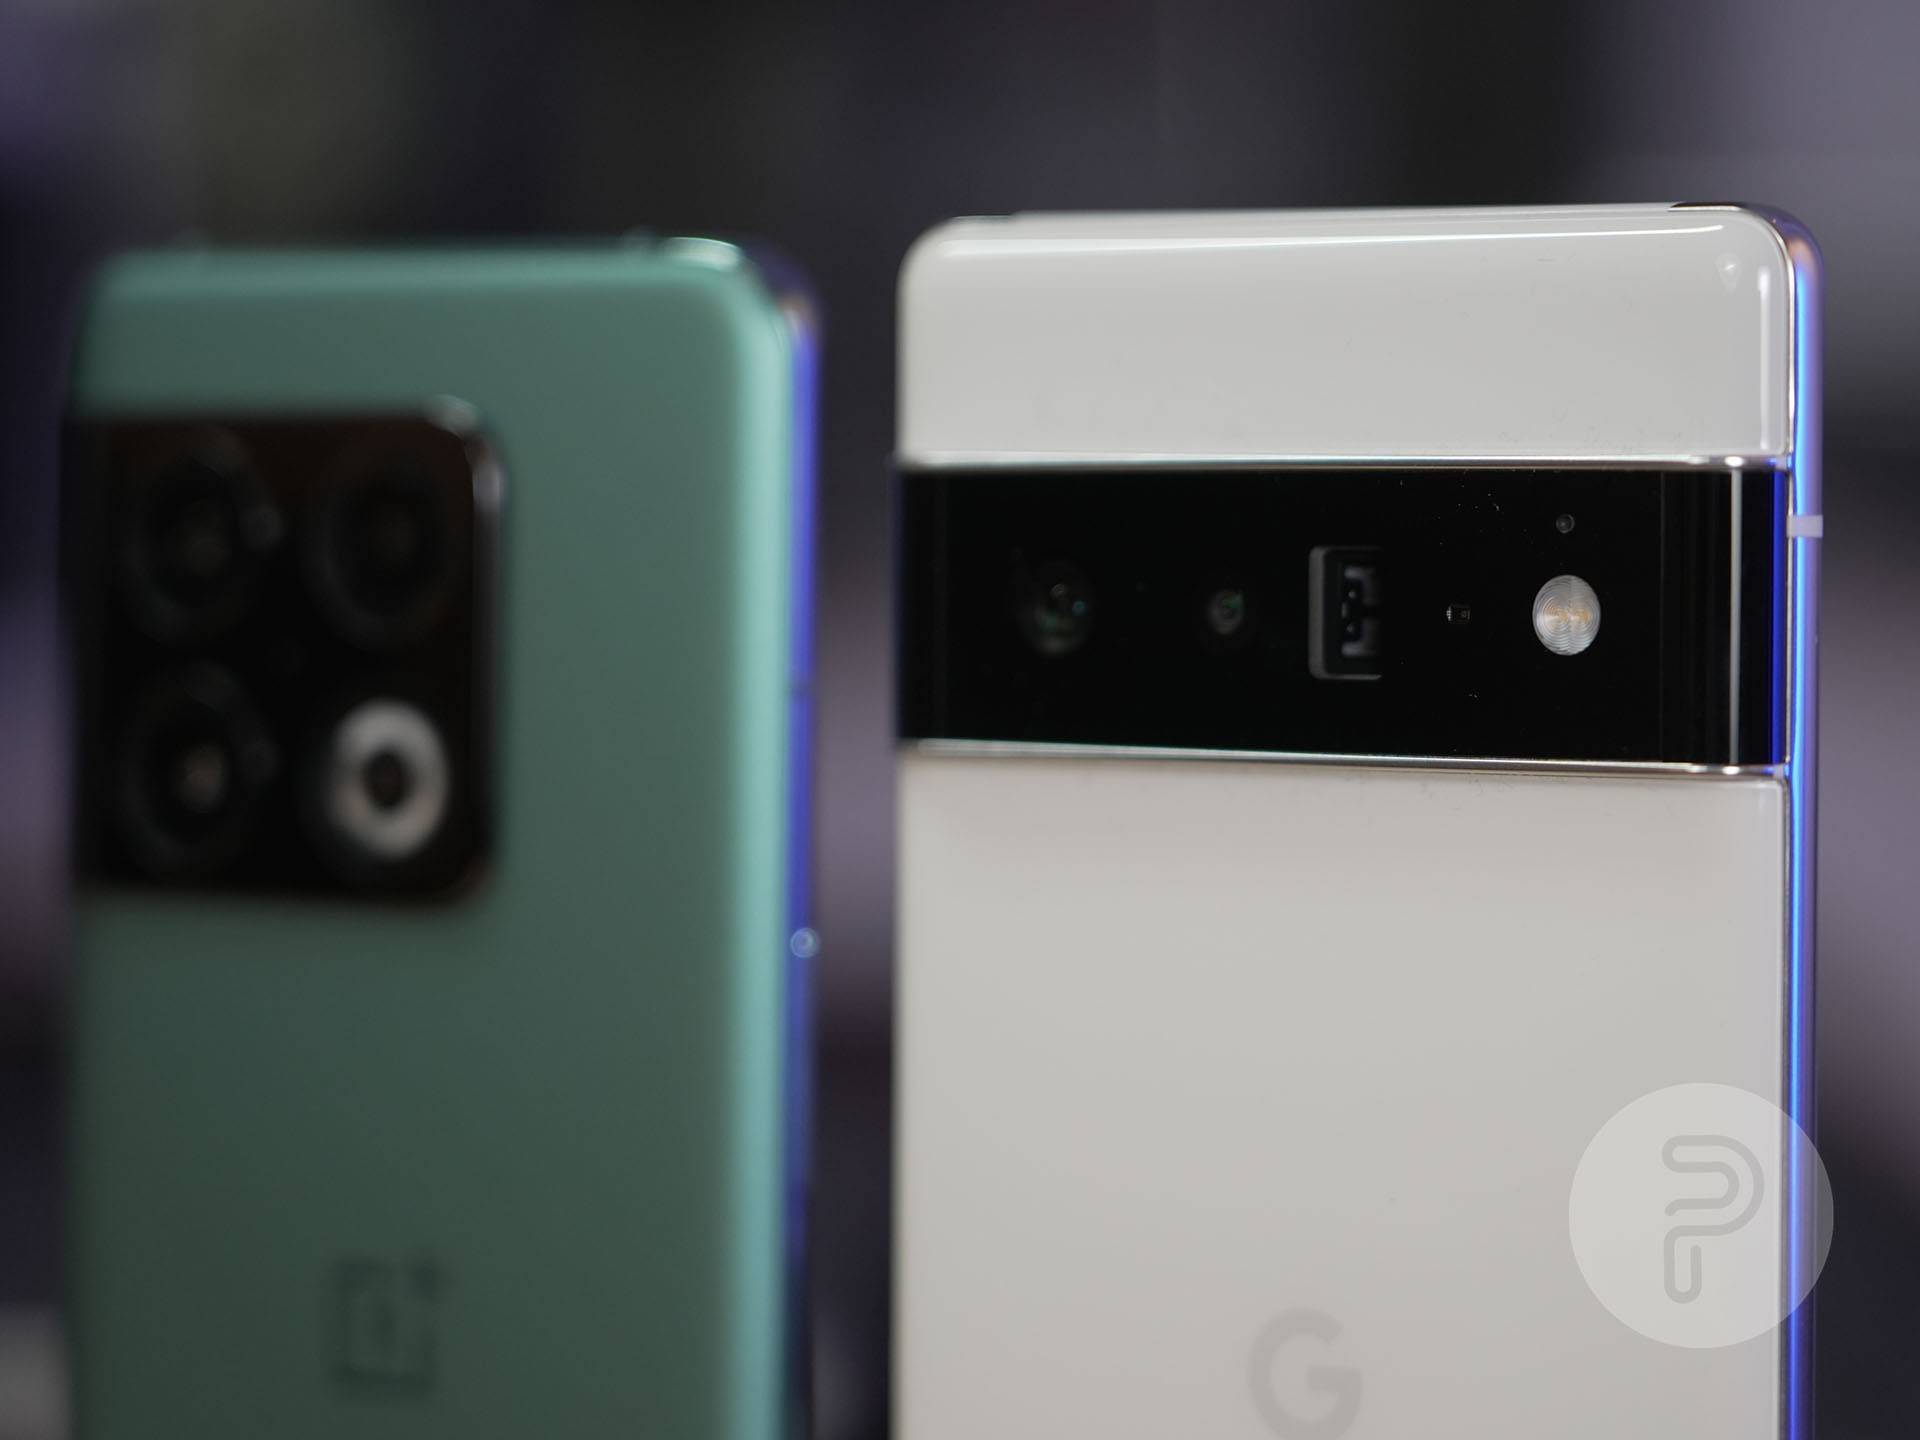 OnePlus 10 Pro vs Google Pixel 6 Pro